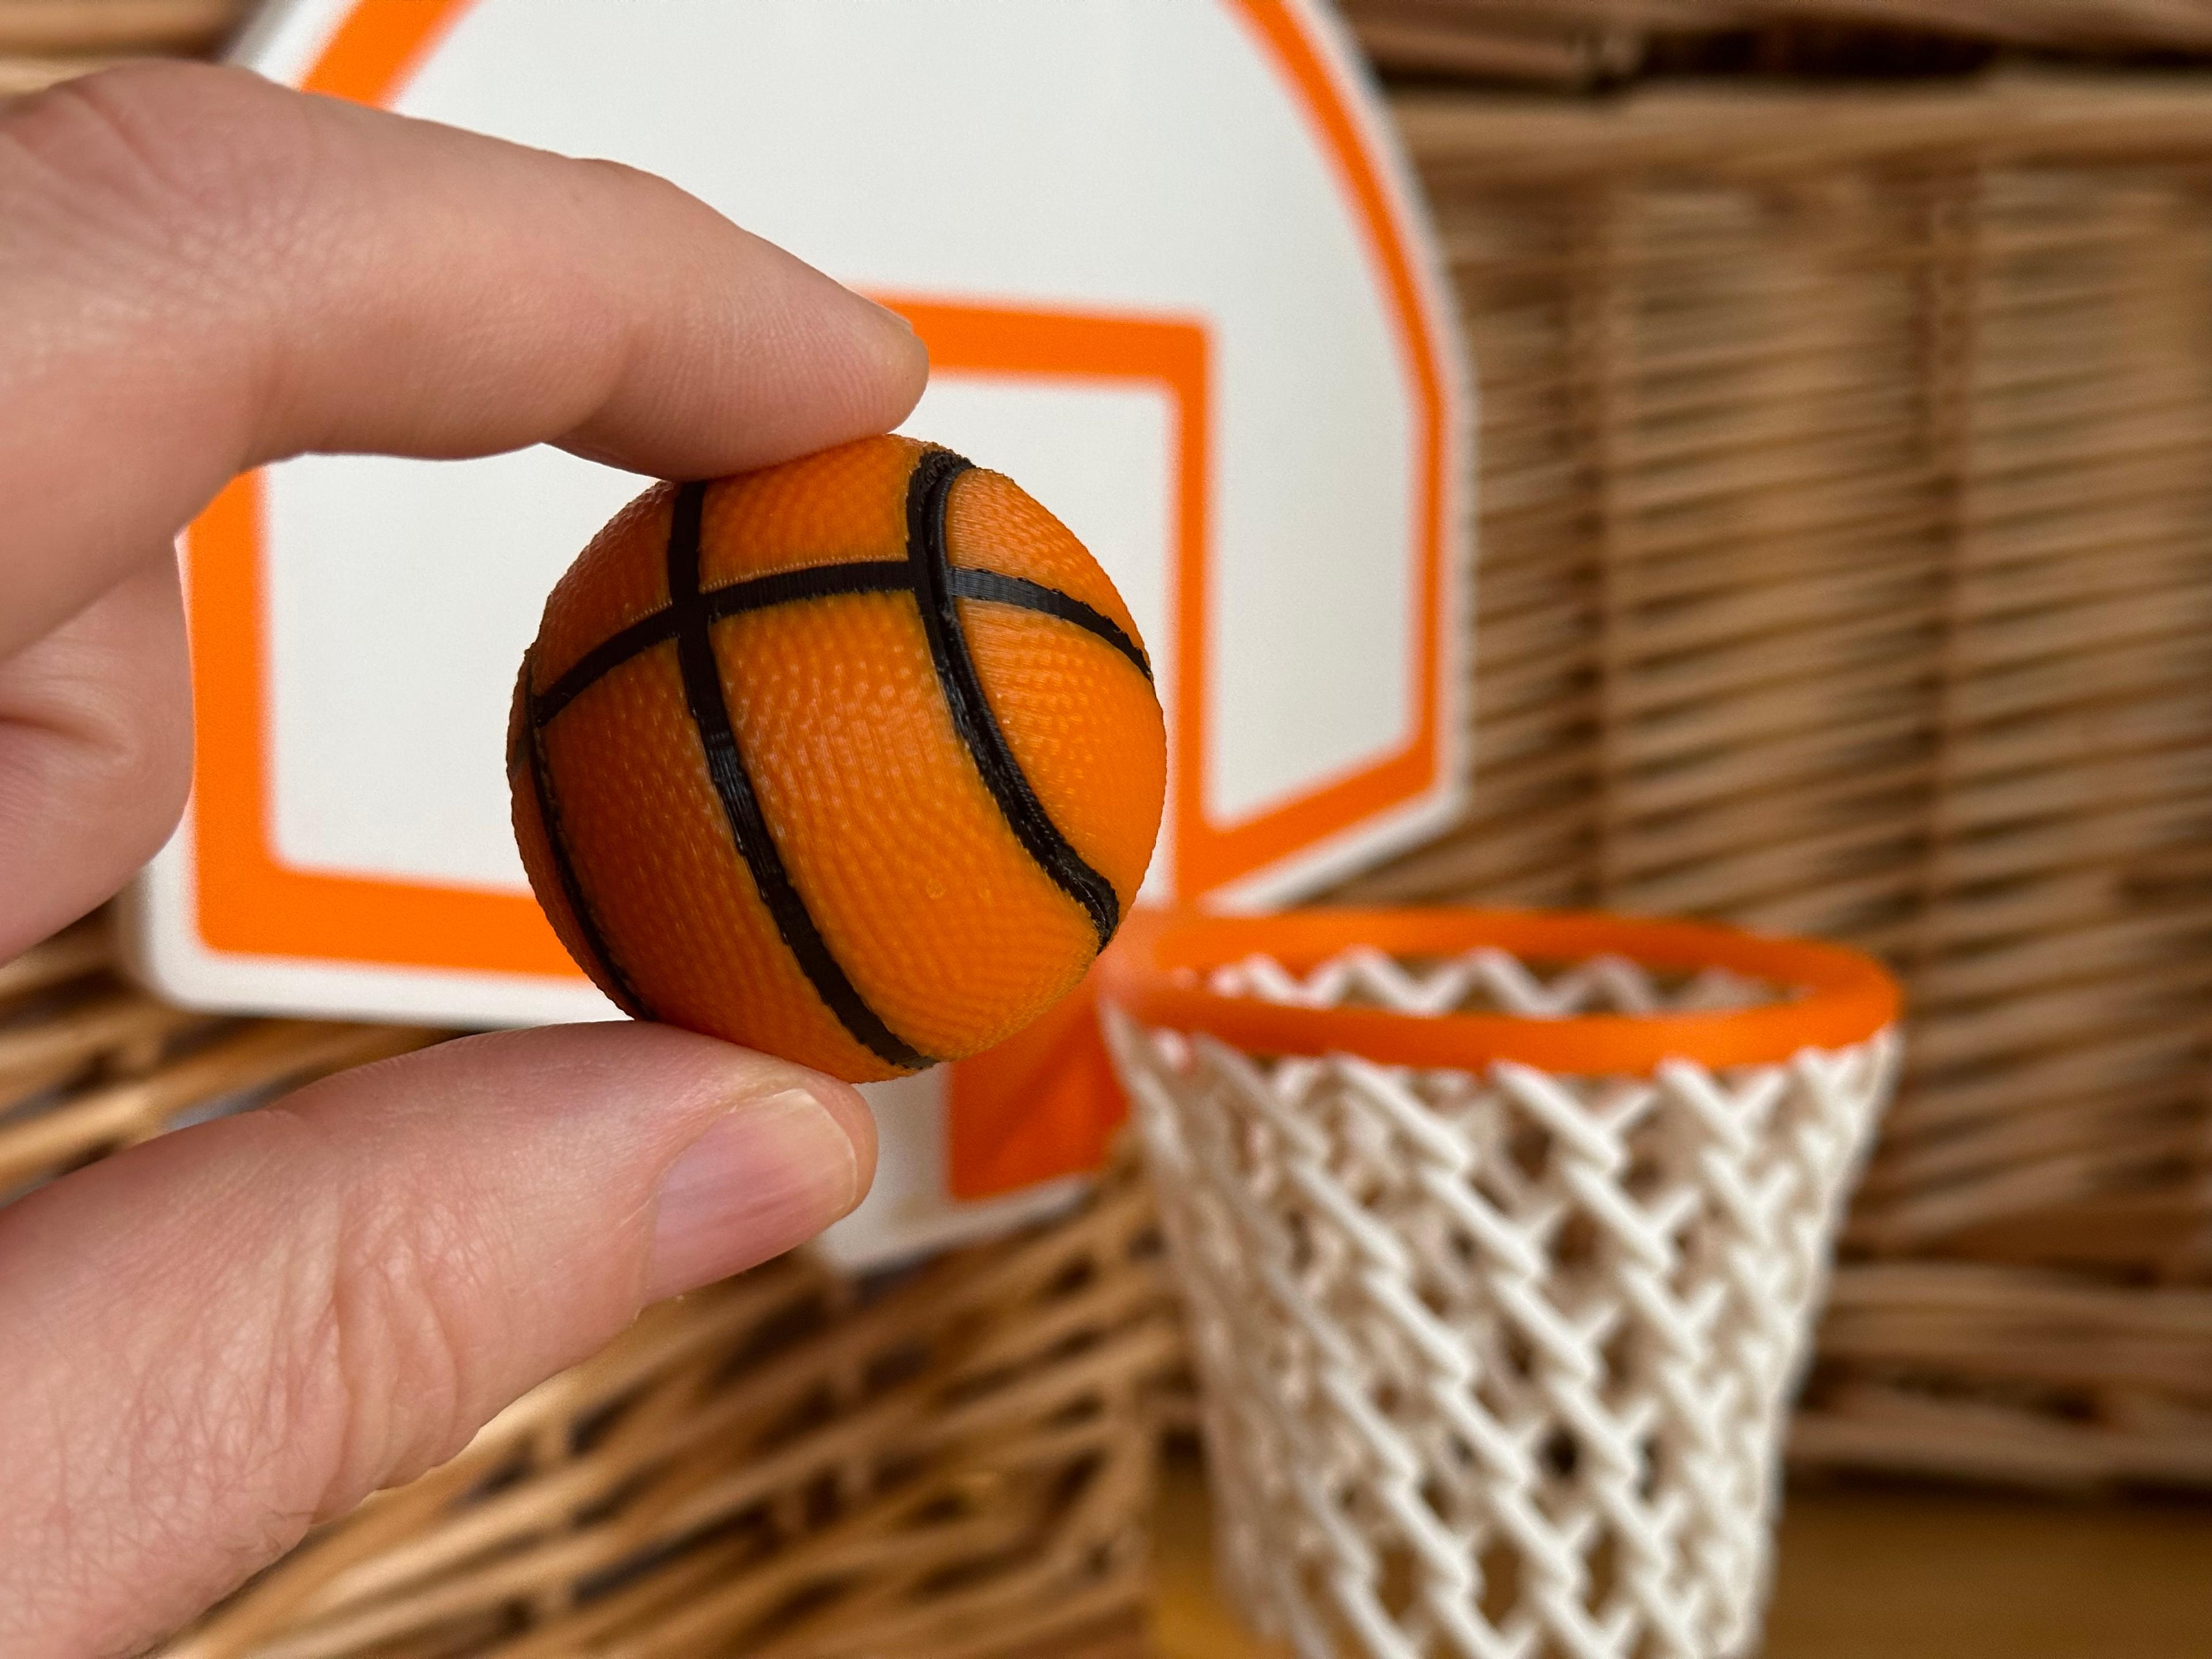 Basket Smalls (Basketball) 3d model